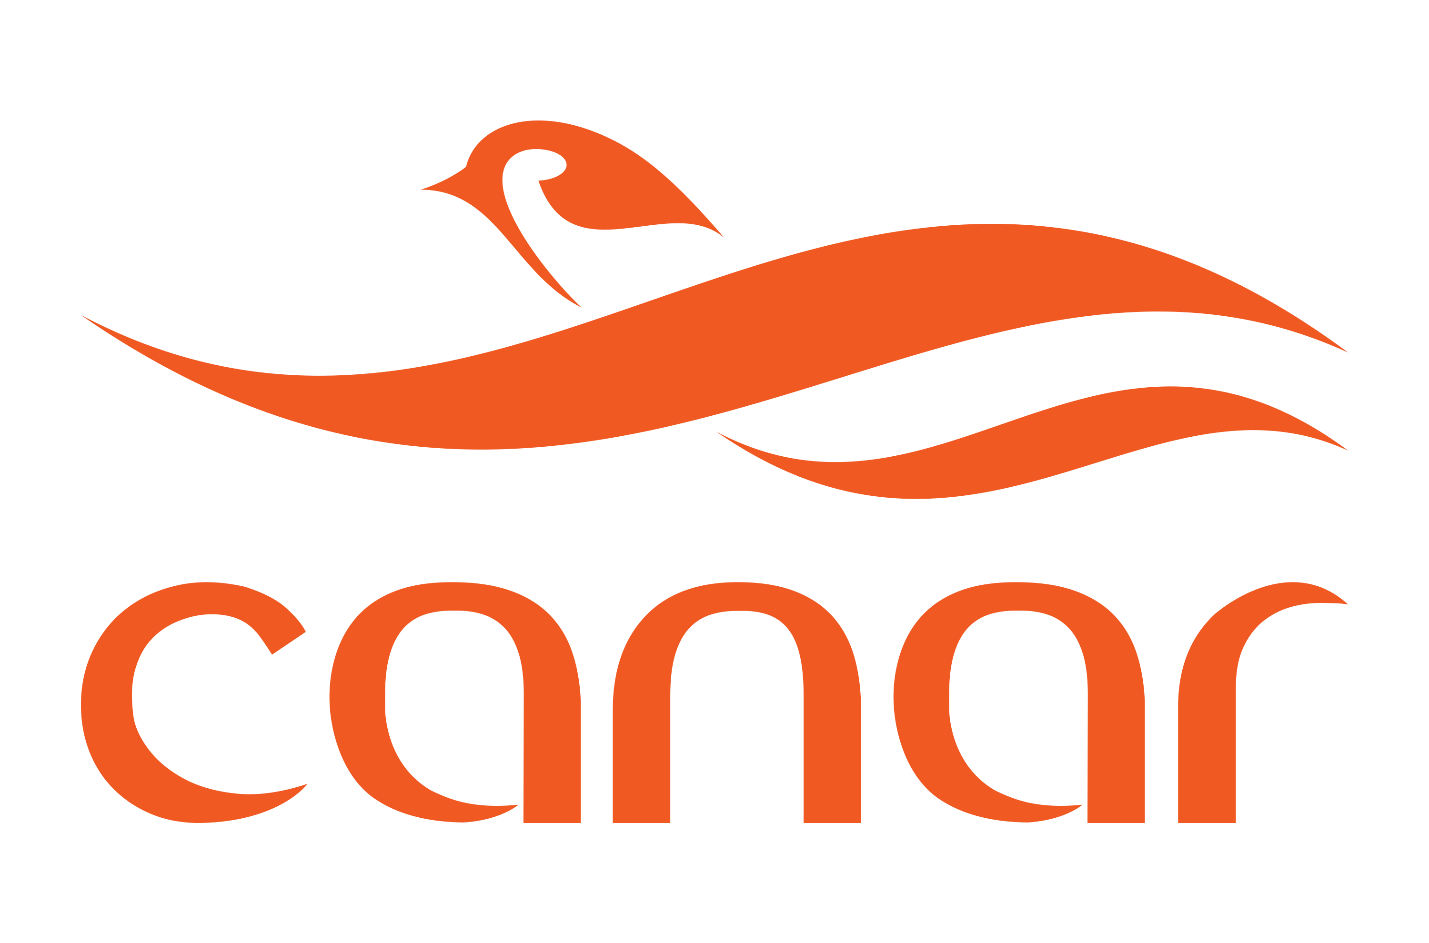 Research sponsor canar